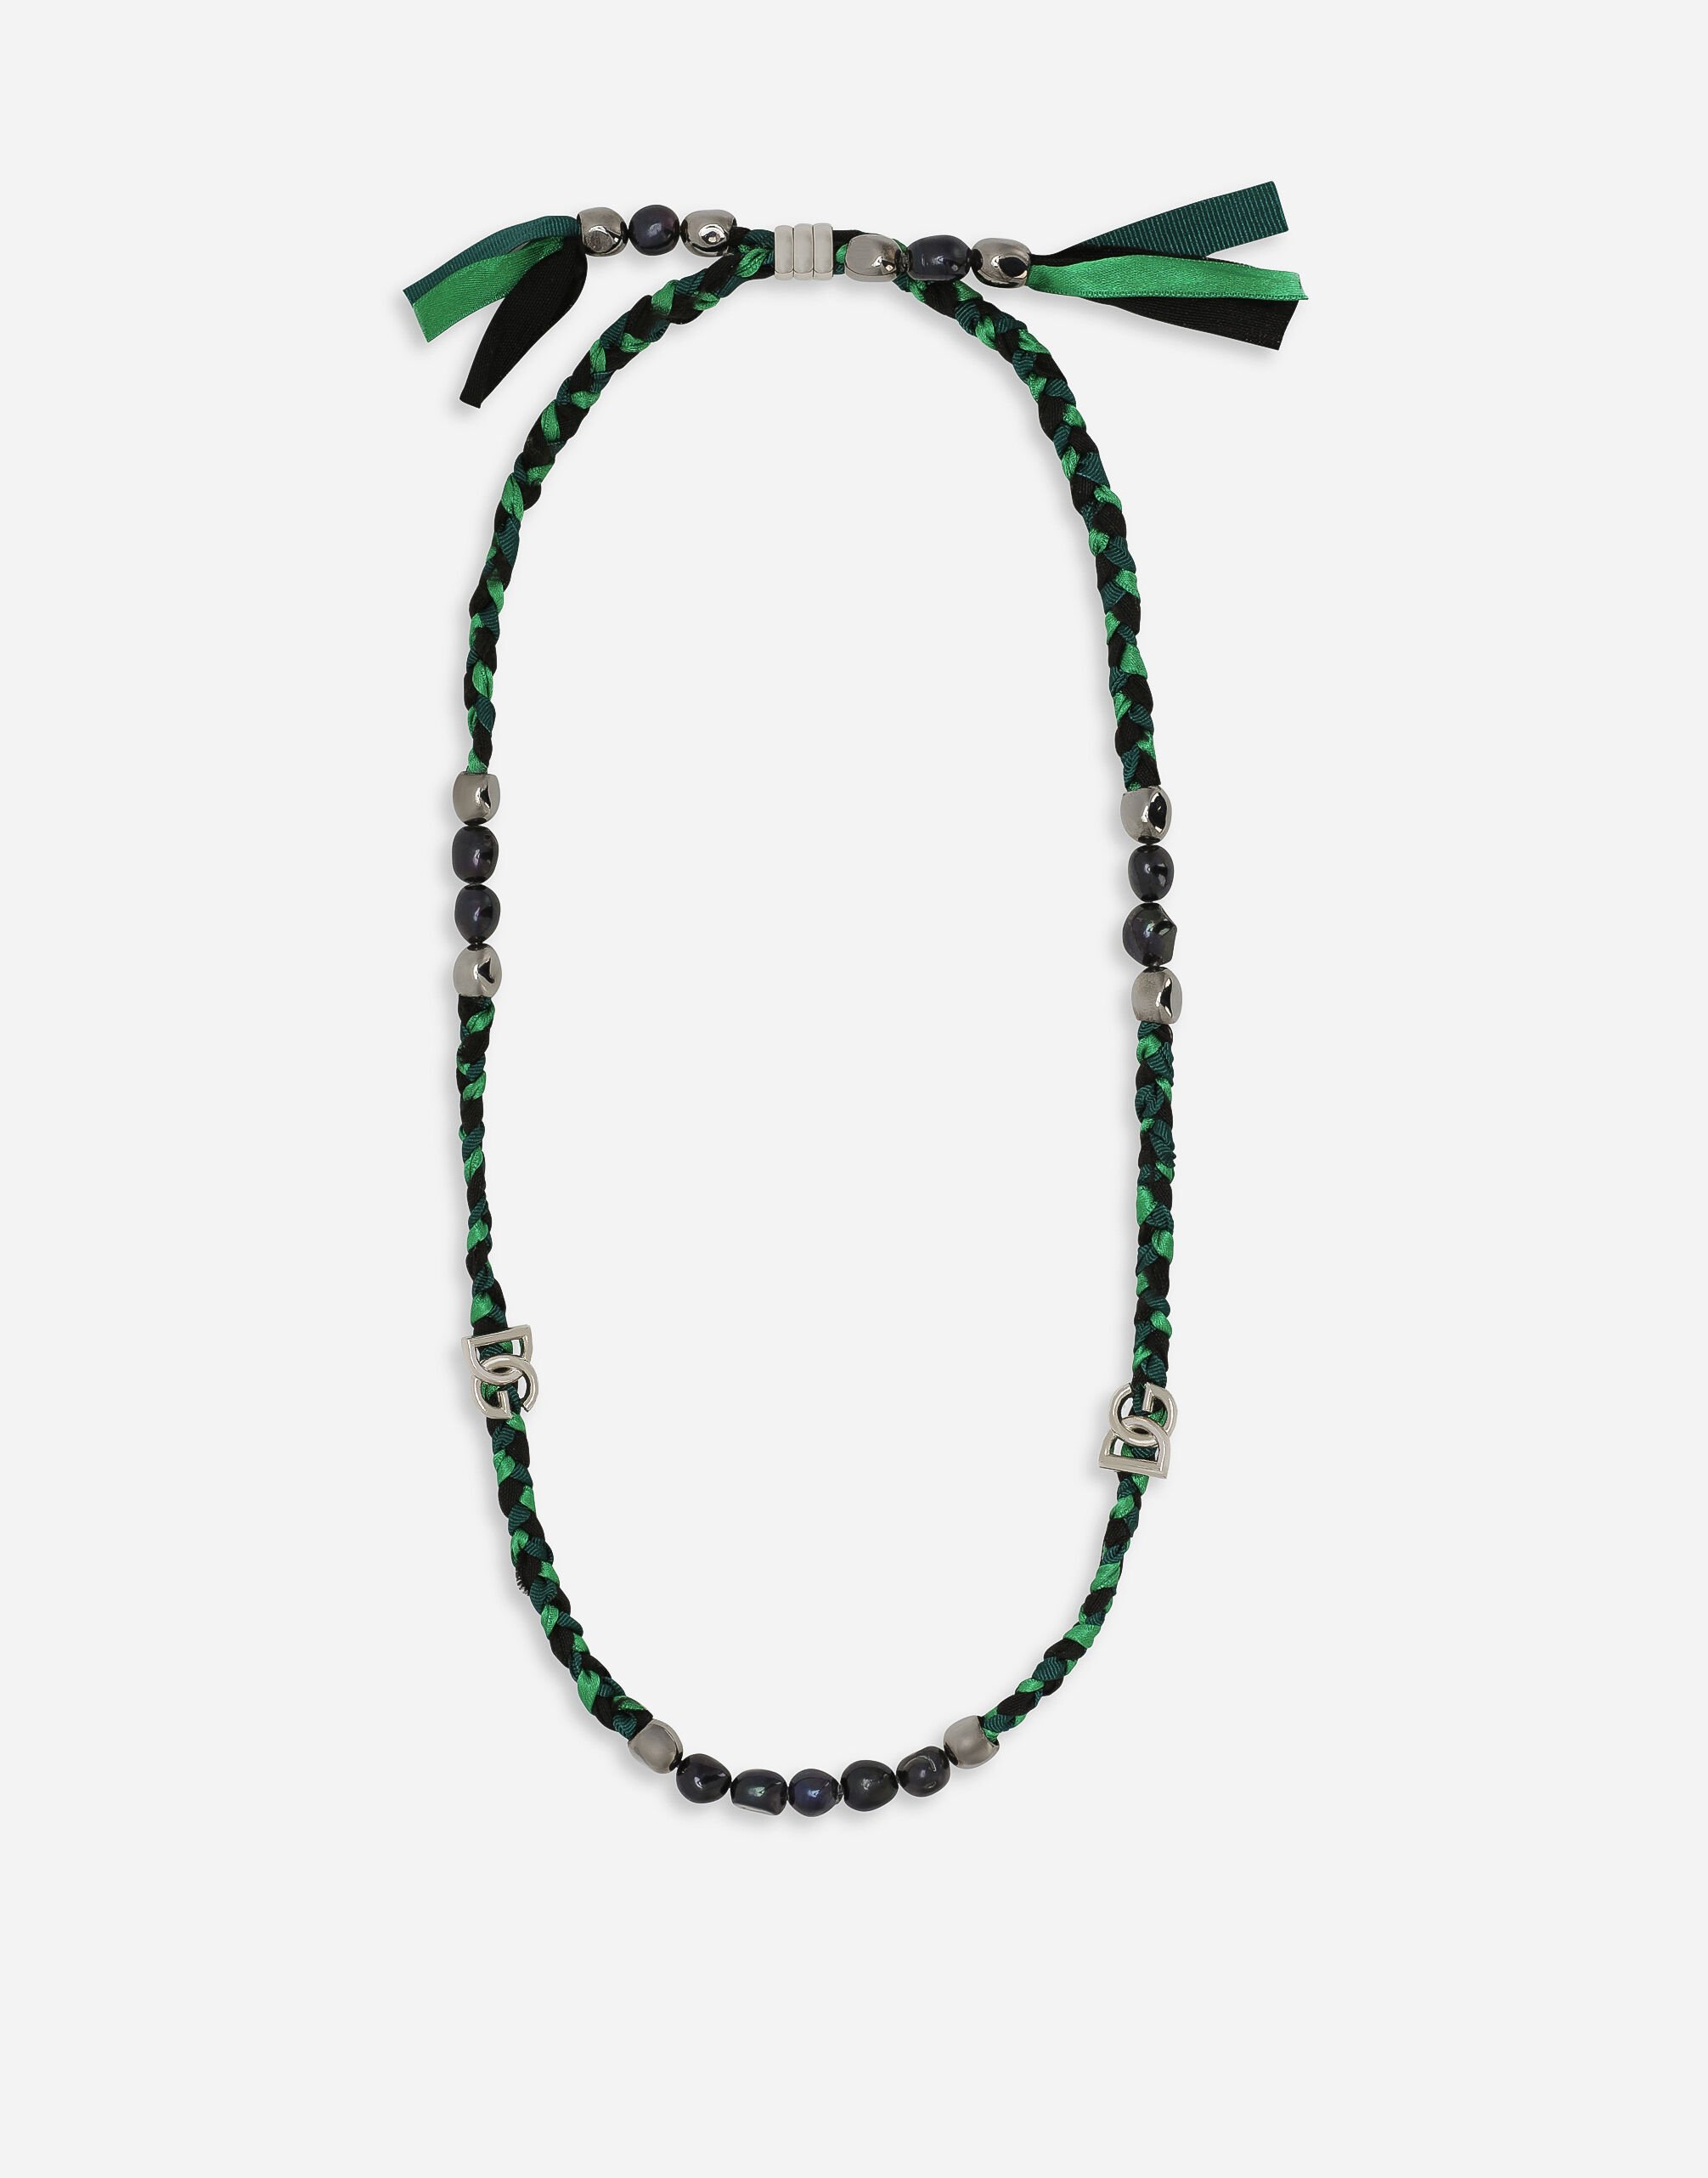 Dolce & Gabbana “Banano” interwoven necklace Print G8RG4THS7M4